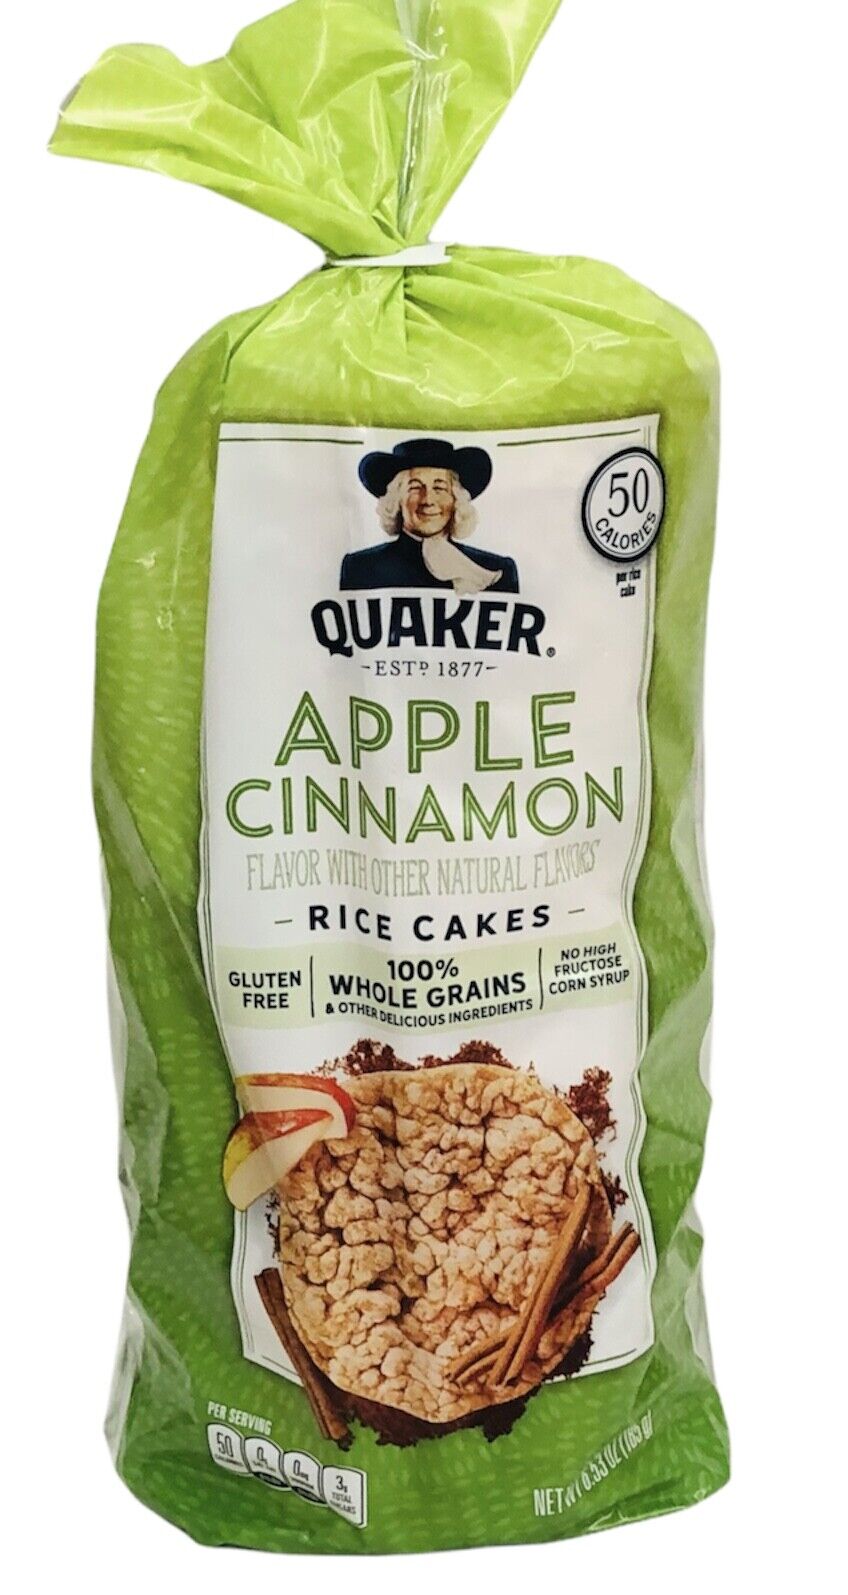 Quaker Apple Cinnamon Gluten Free Rice Cakes 6.53 oz